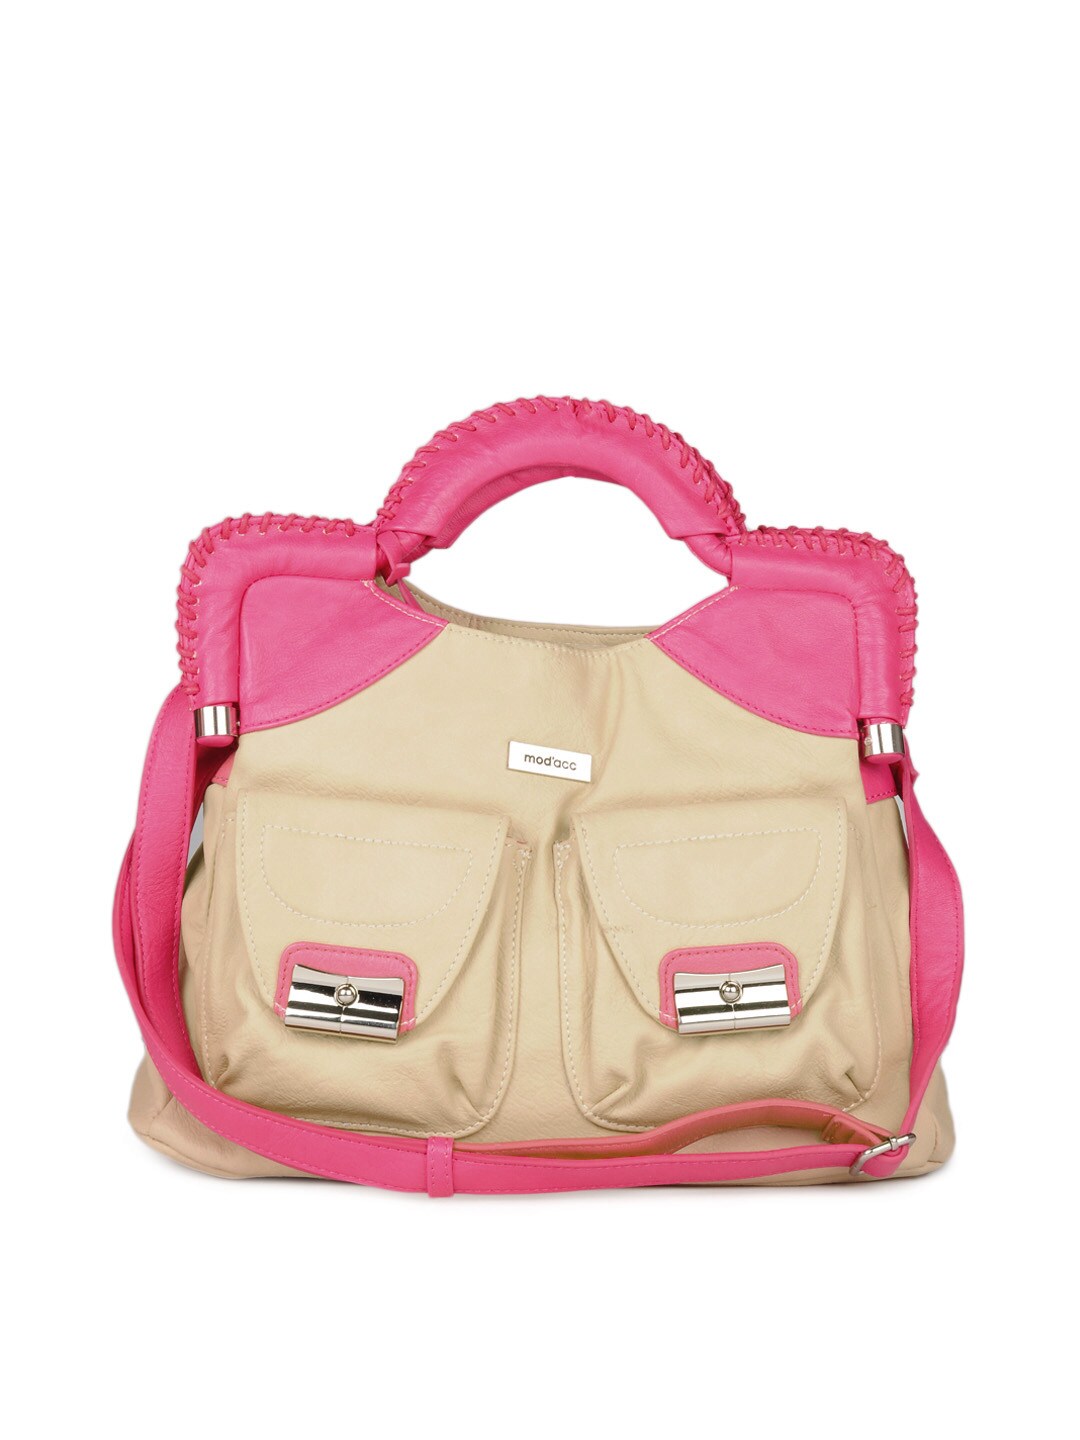 Mod'acc Women Pink & Beige Handbag